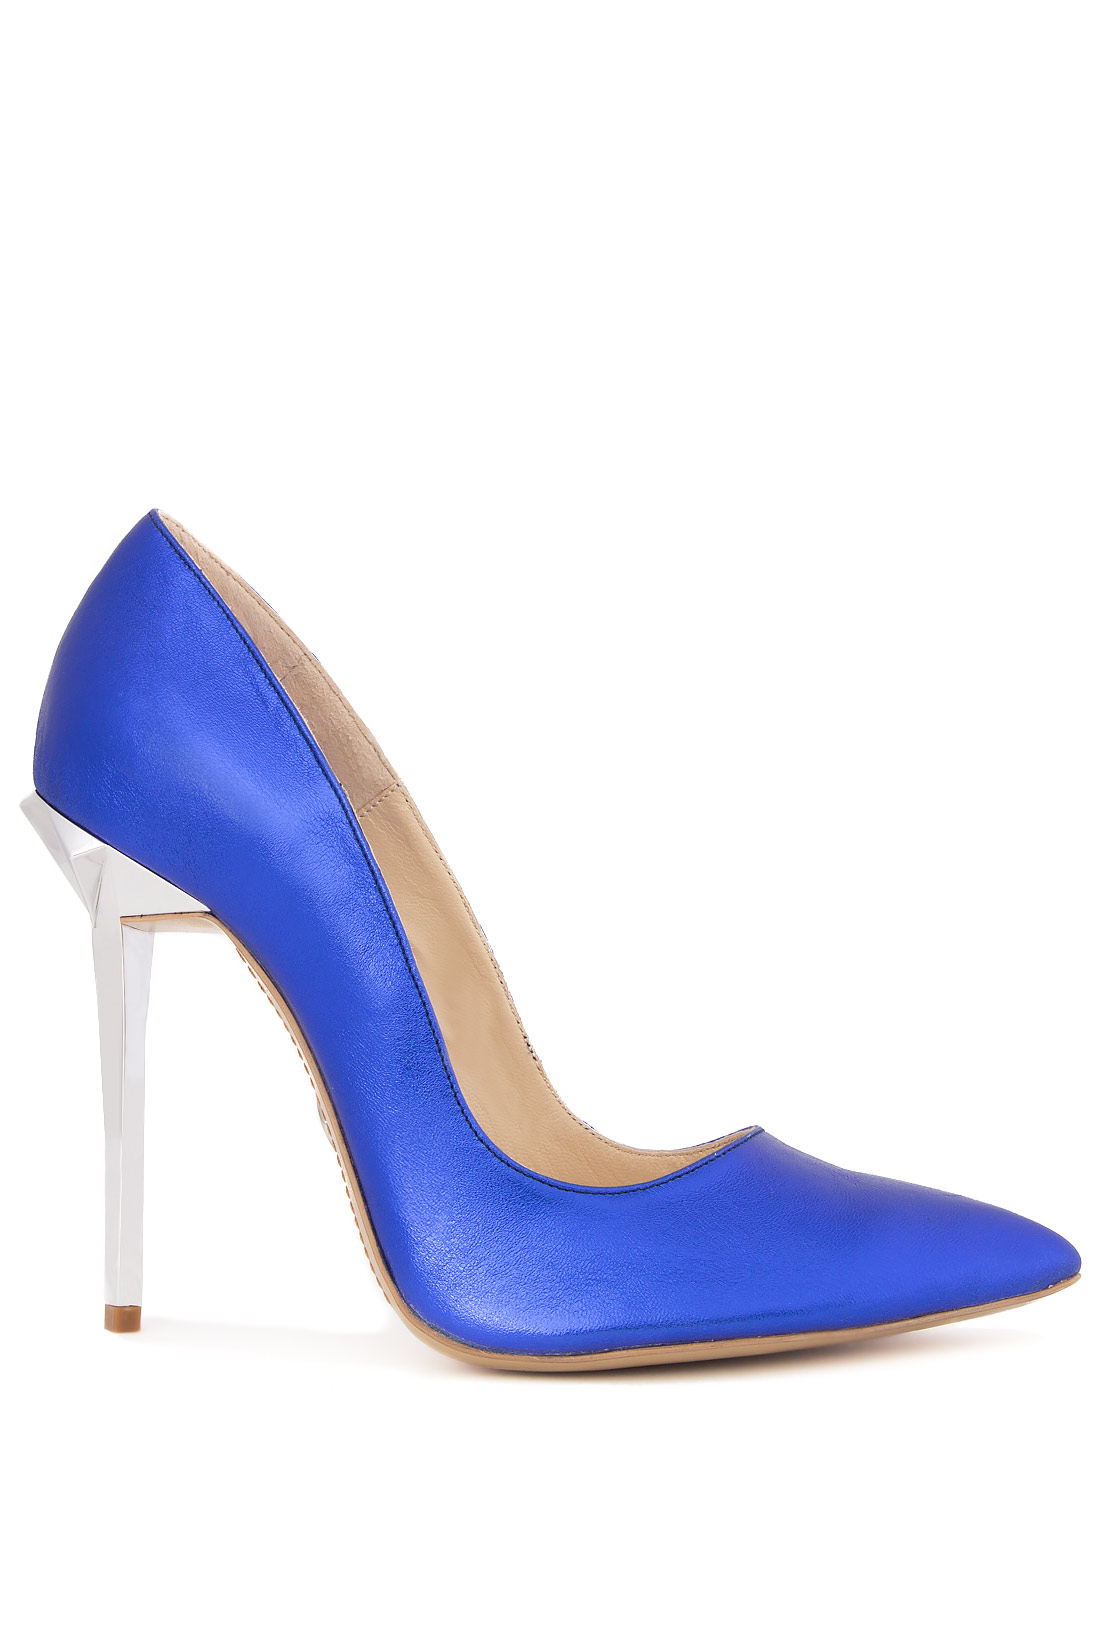 Pantofi stiletto albastru metalizat MIHAI ALBU SECOND HAND imagine 0